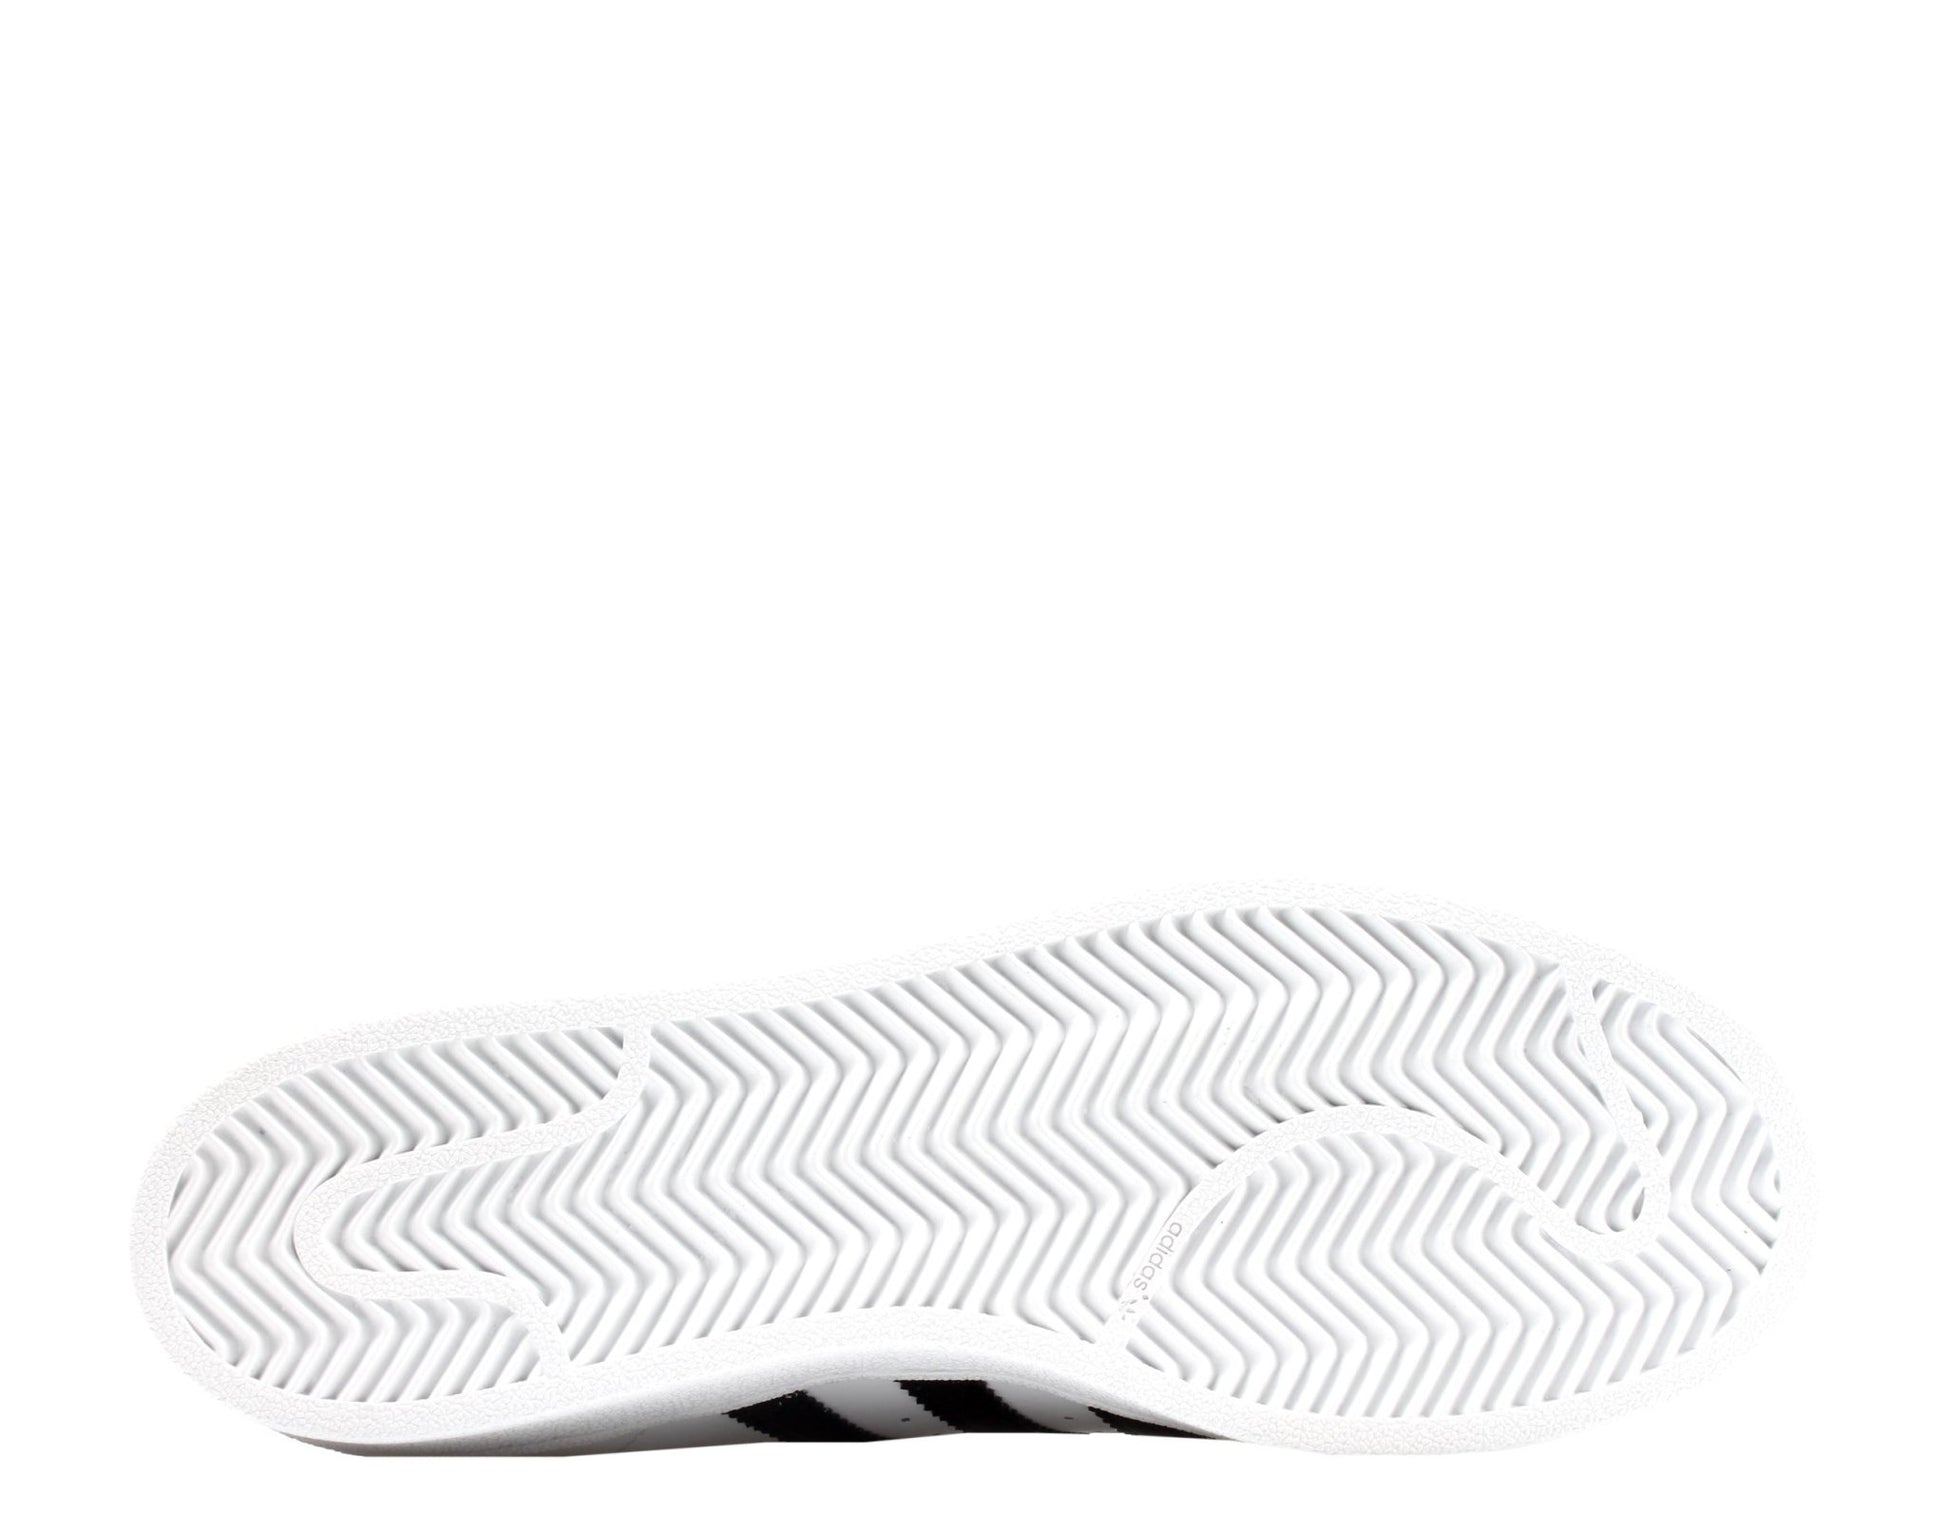 Adidas Superstar White/Black Men's Basketball Shoes C77124 - Becauze